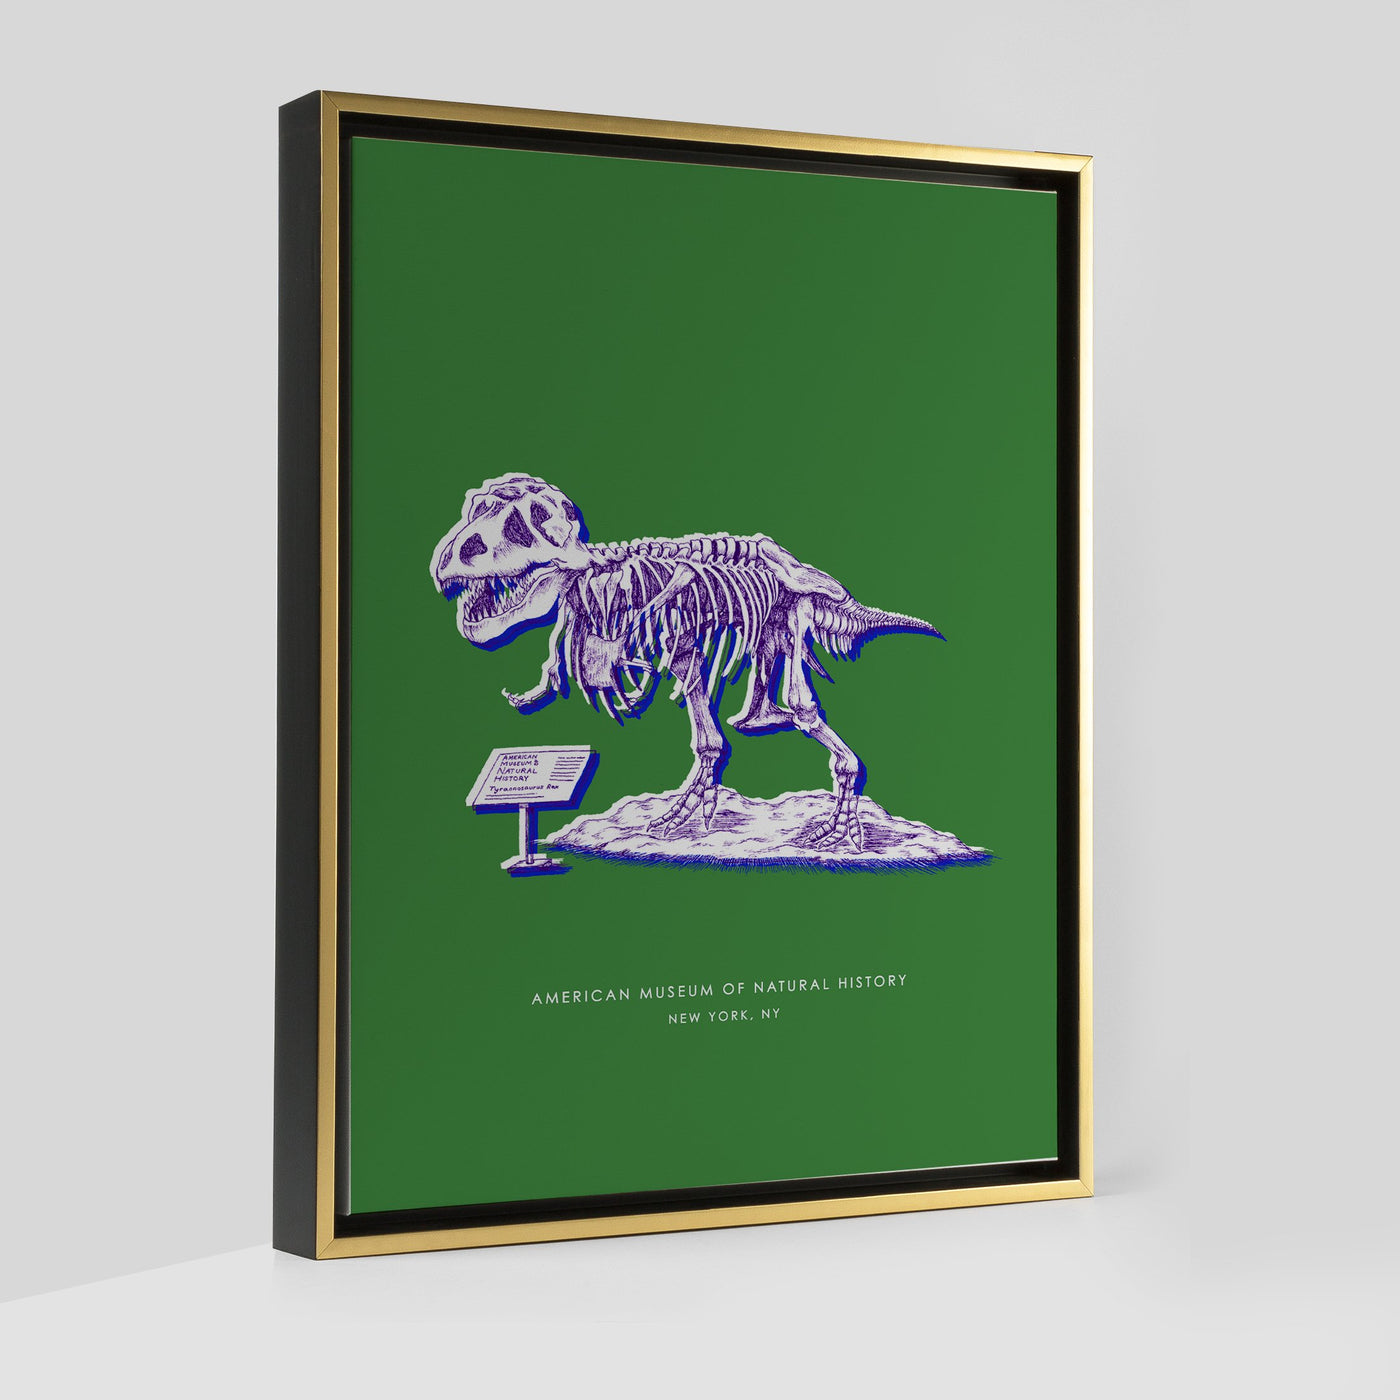 Gallery Prints Green Canvas / 8x10 / Gold Frame New York Dinosaur Print Katie Kime